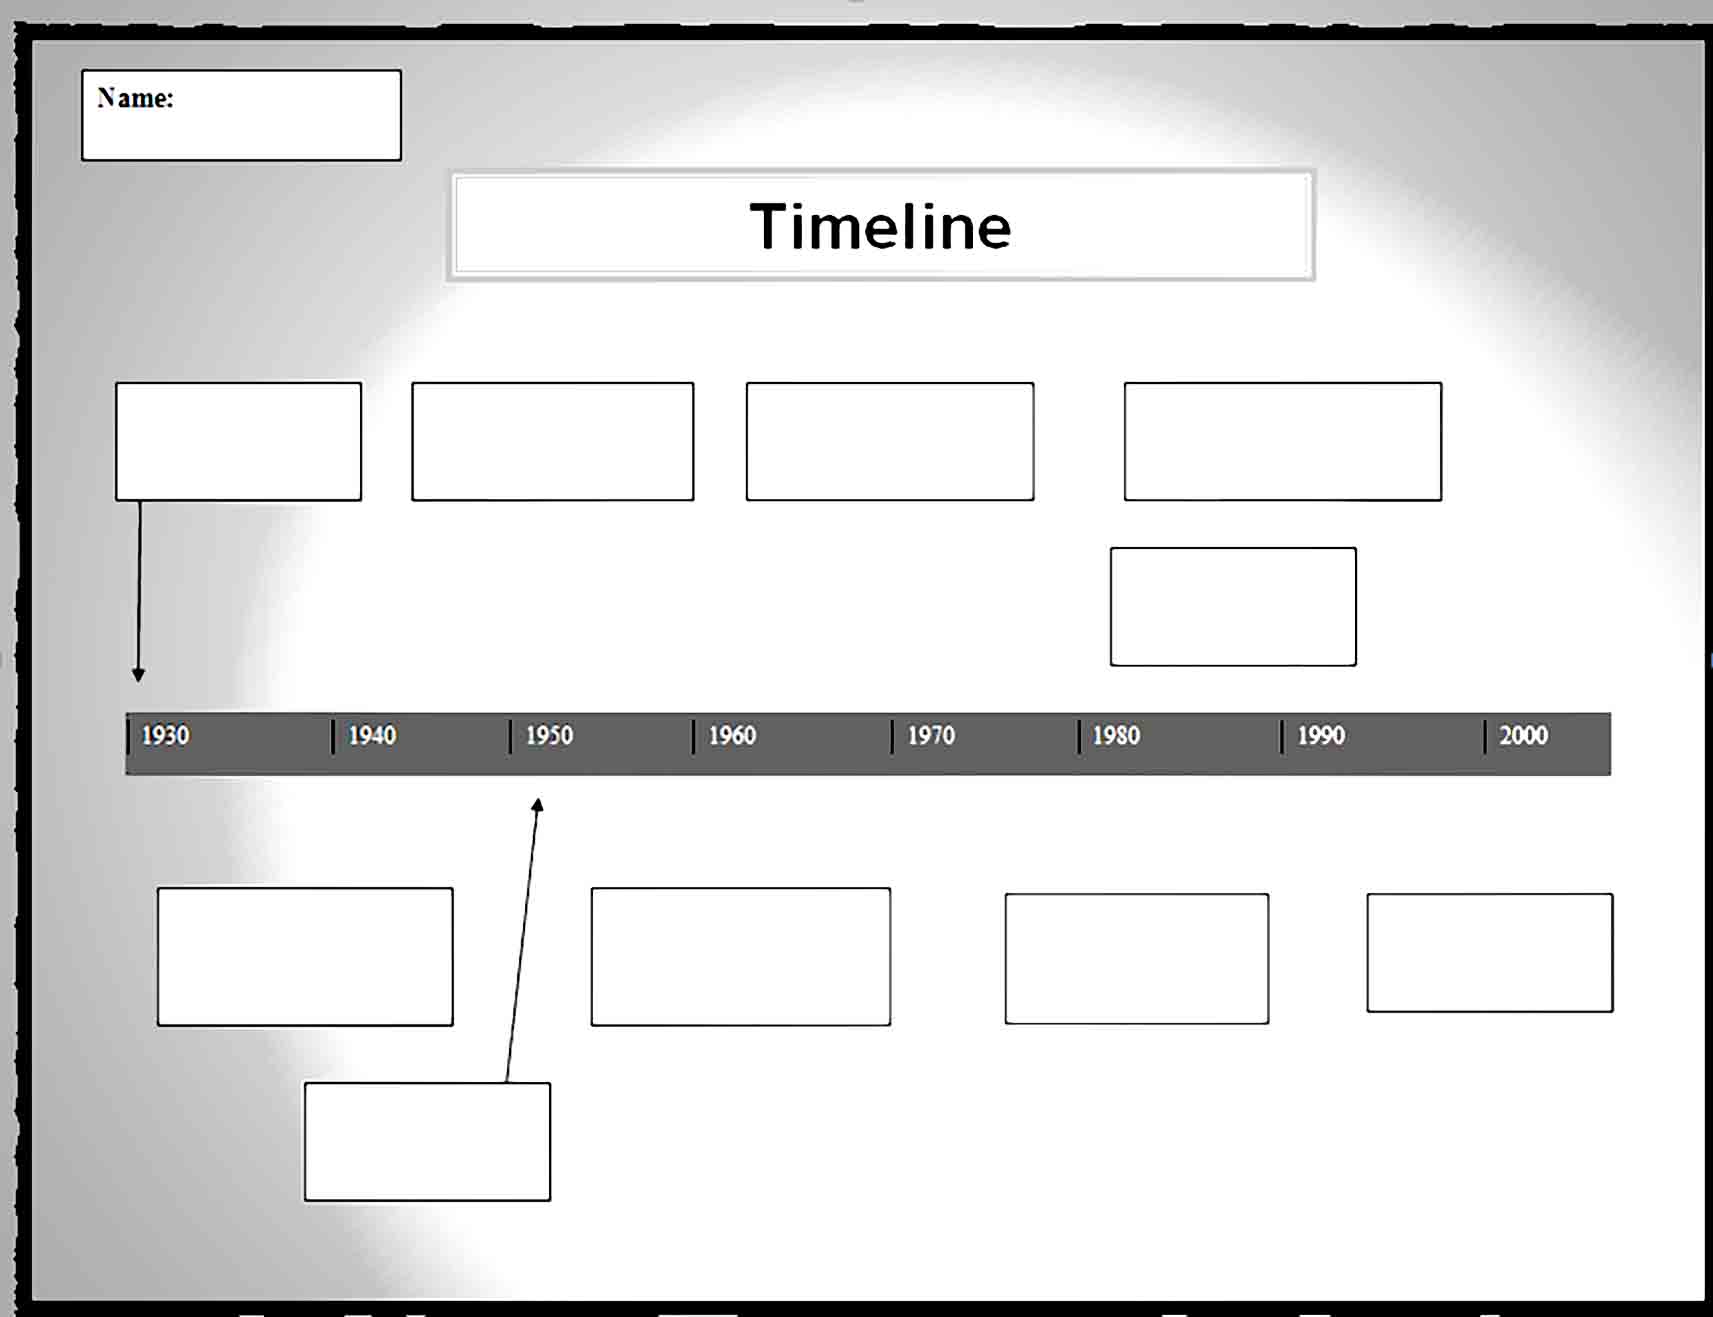 Timeline Template 02.